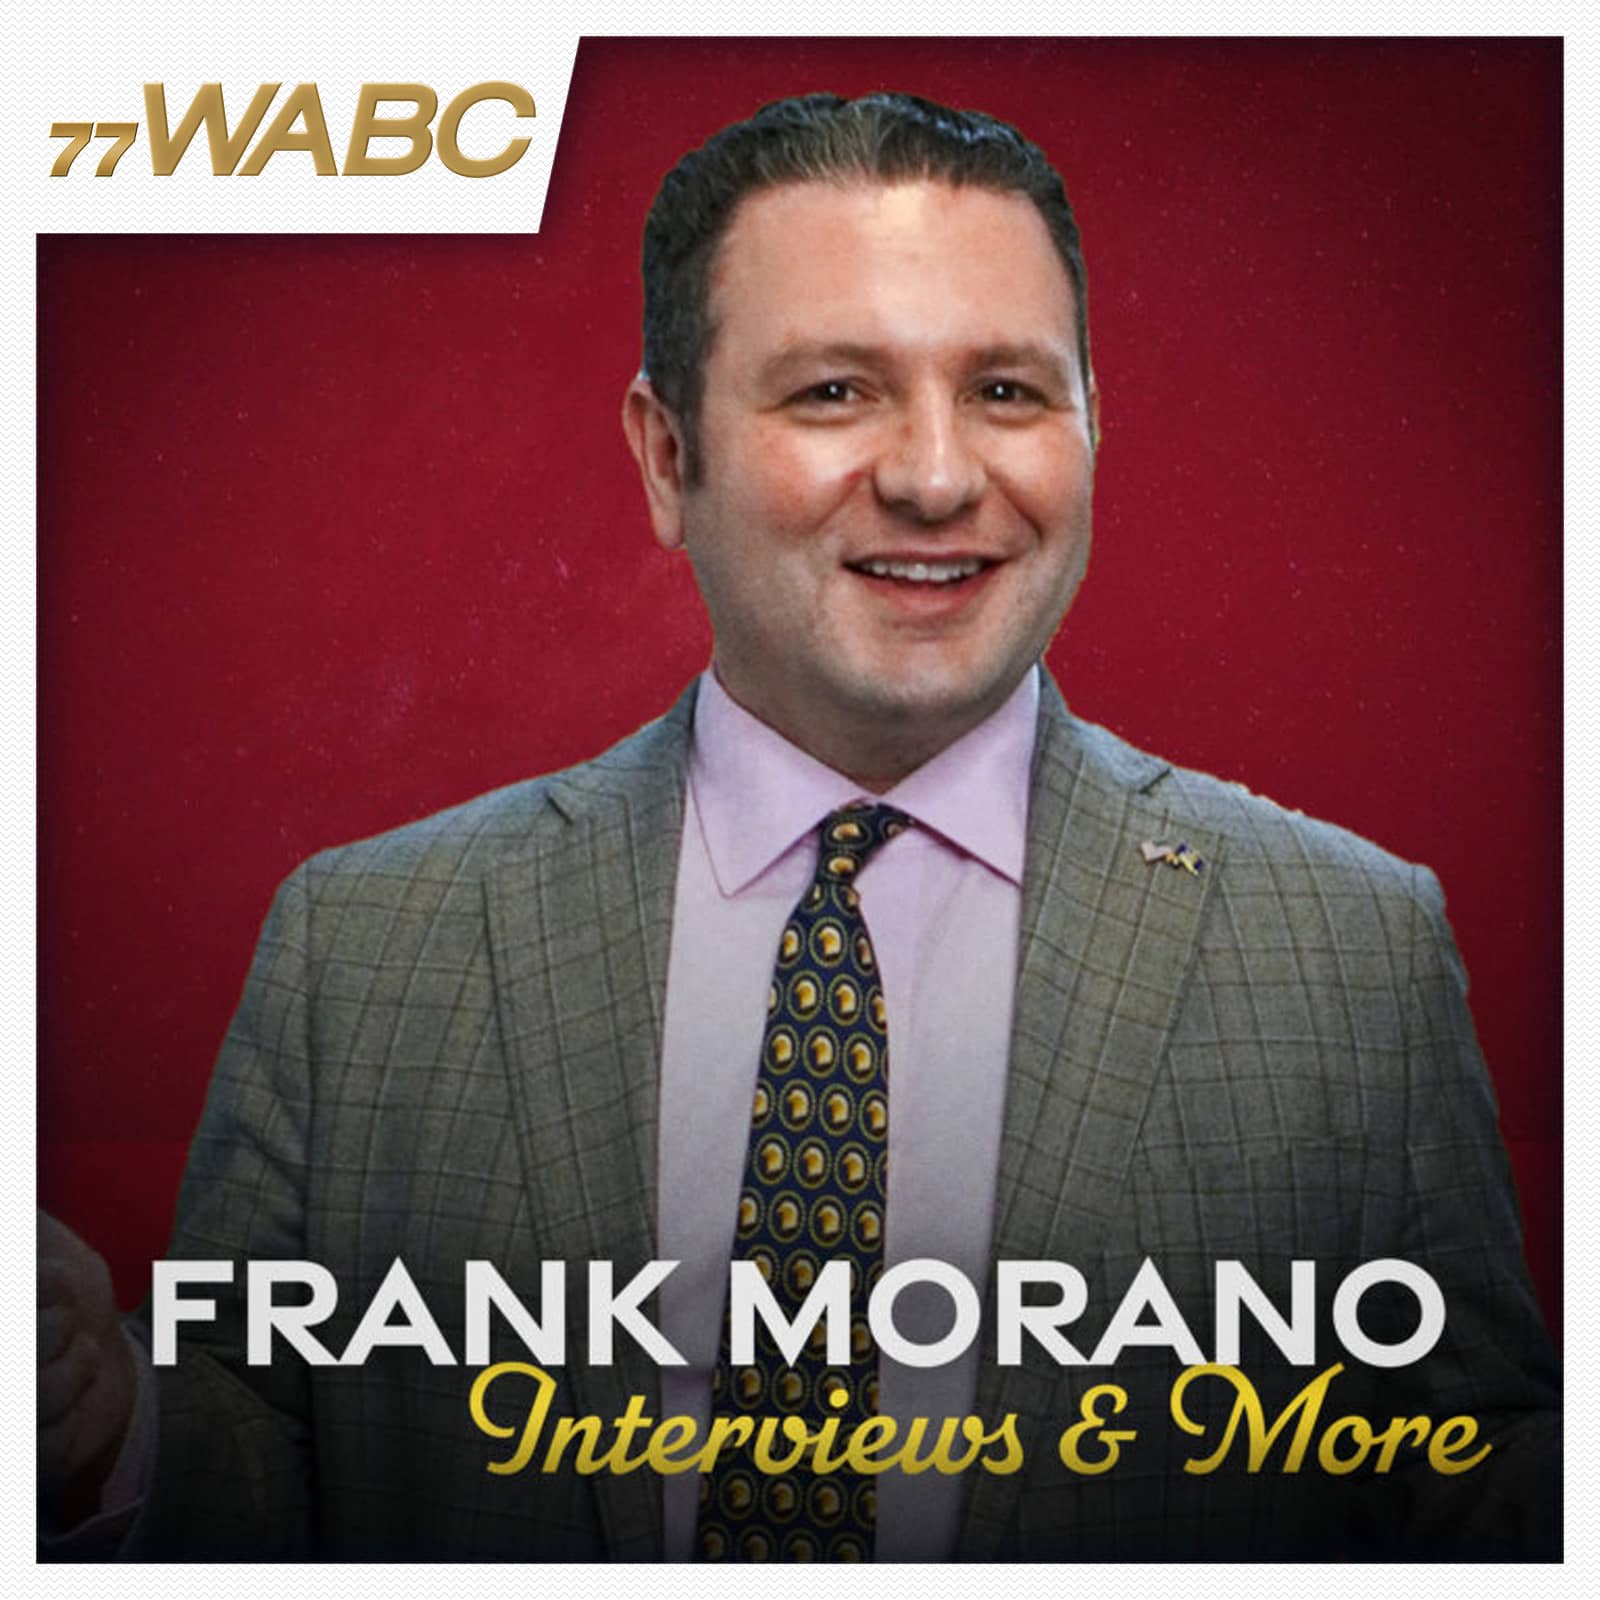 frank-morano-interviews-and-more-podcast-new-logo-176